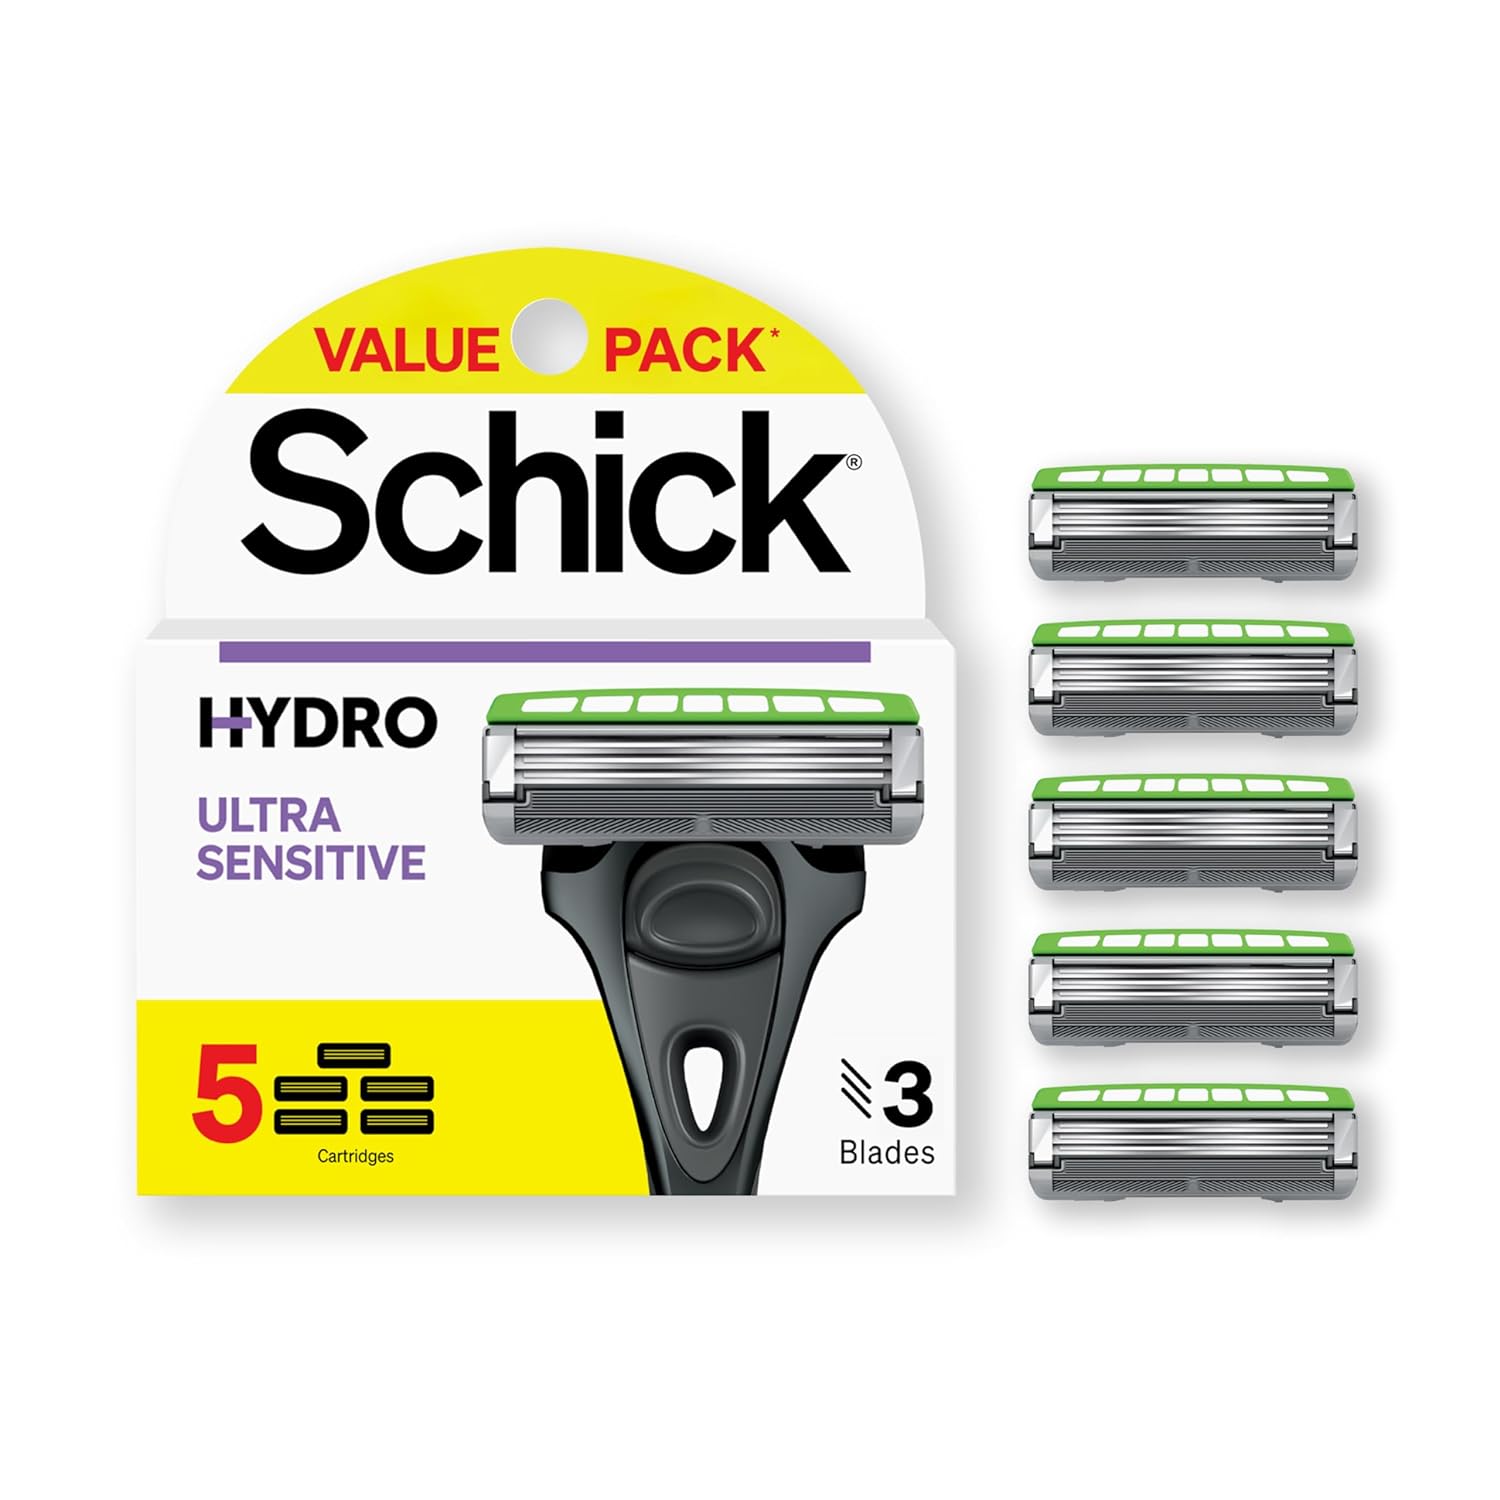 Schick Hydro Slim Head Sensitive Refills — Schick Razor Refills for Men, Men’s Razor Refills, 5 Count